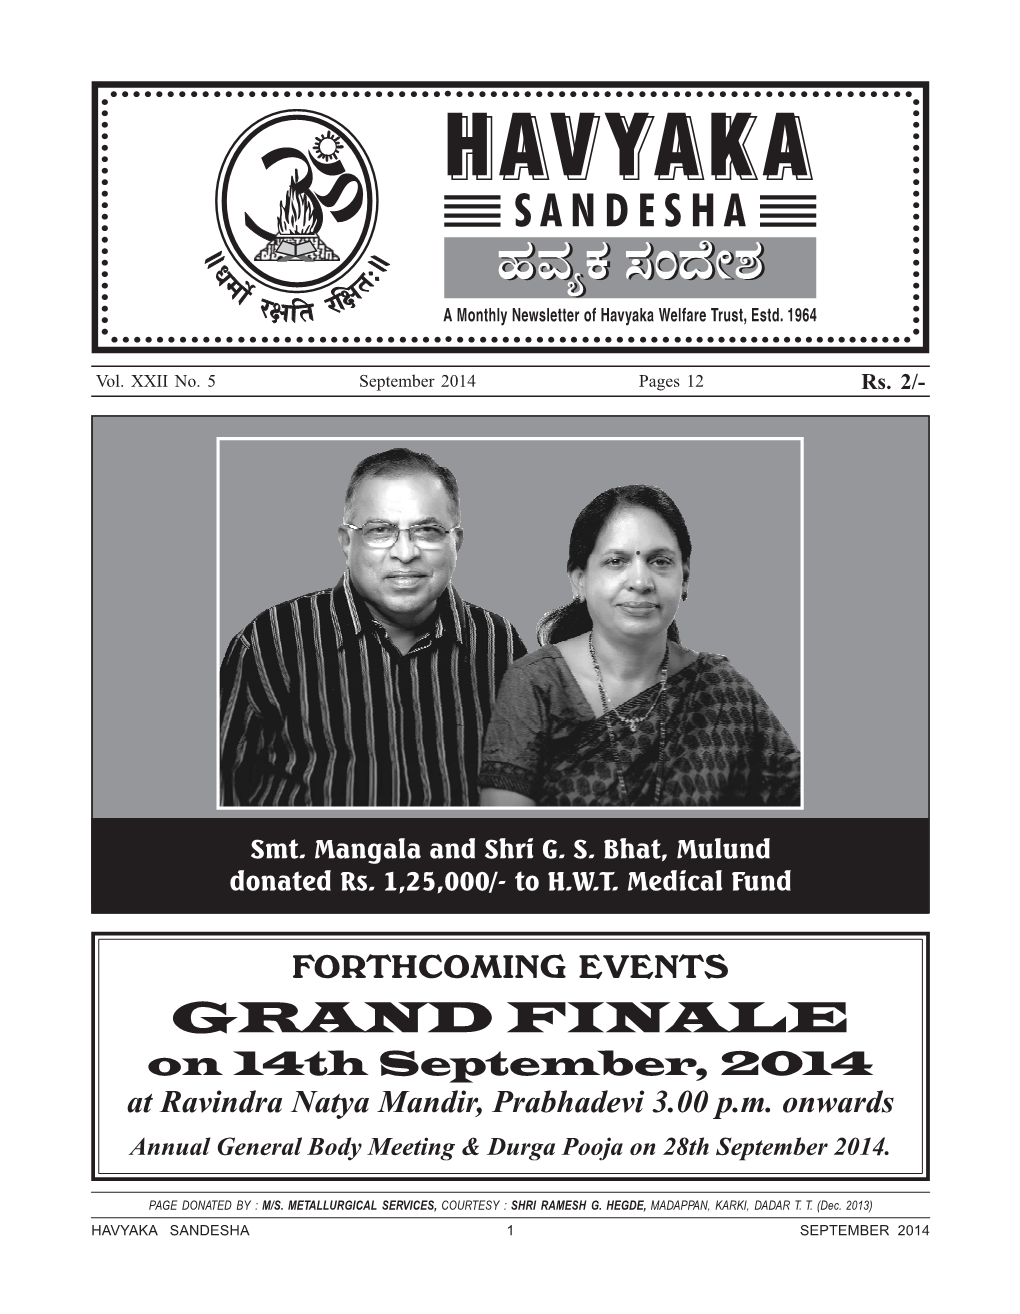 GRAND FINALE on 14Th September, 2014 at Ravindra Natya Mandir, Prabhadevi 3.00 P.M